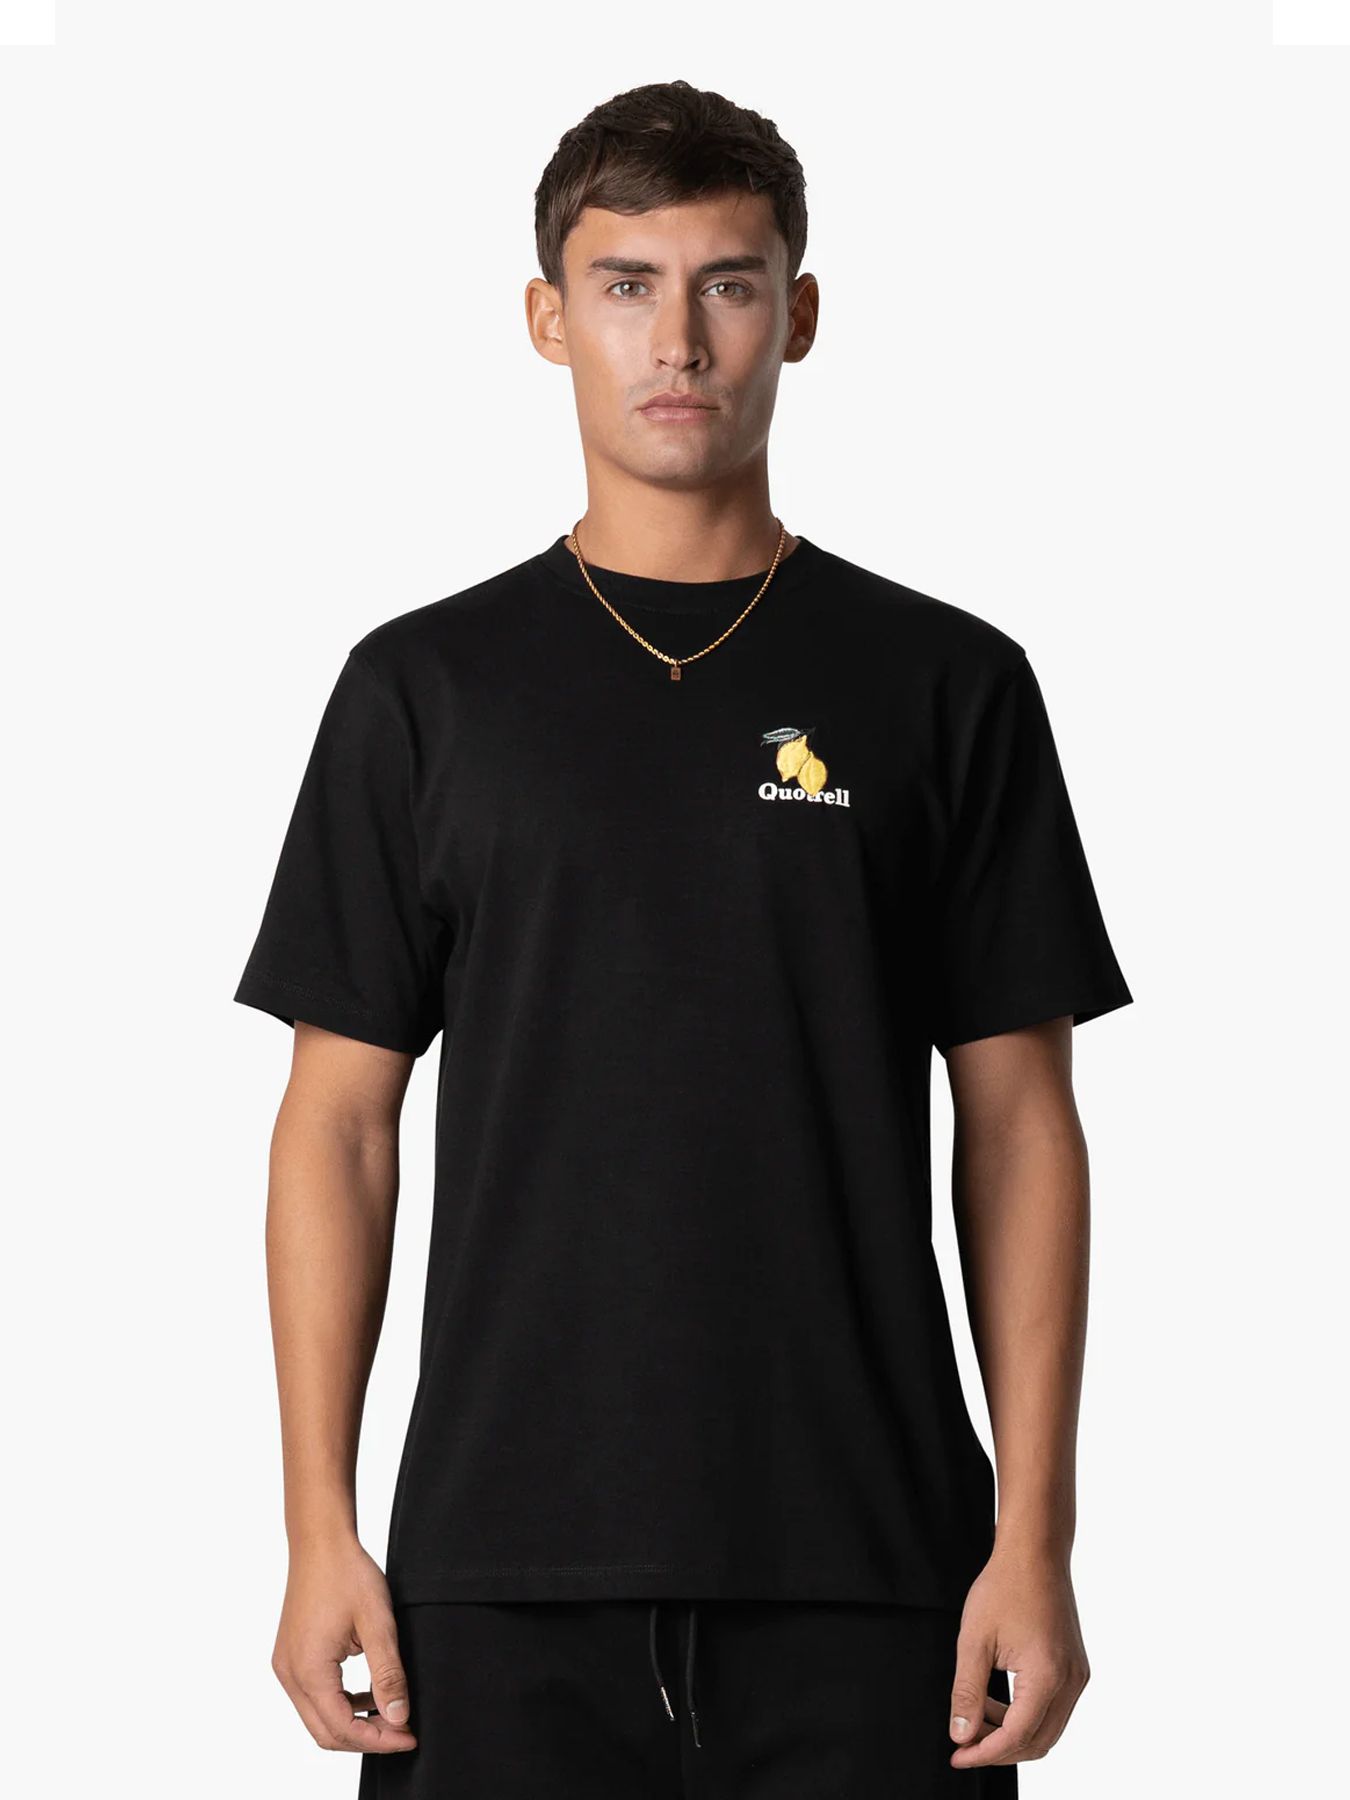 Quotrell Limone t-shirt Black/White 00108491-904